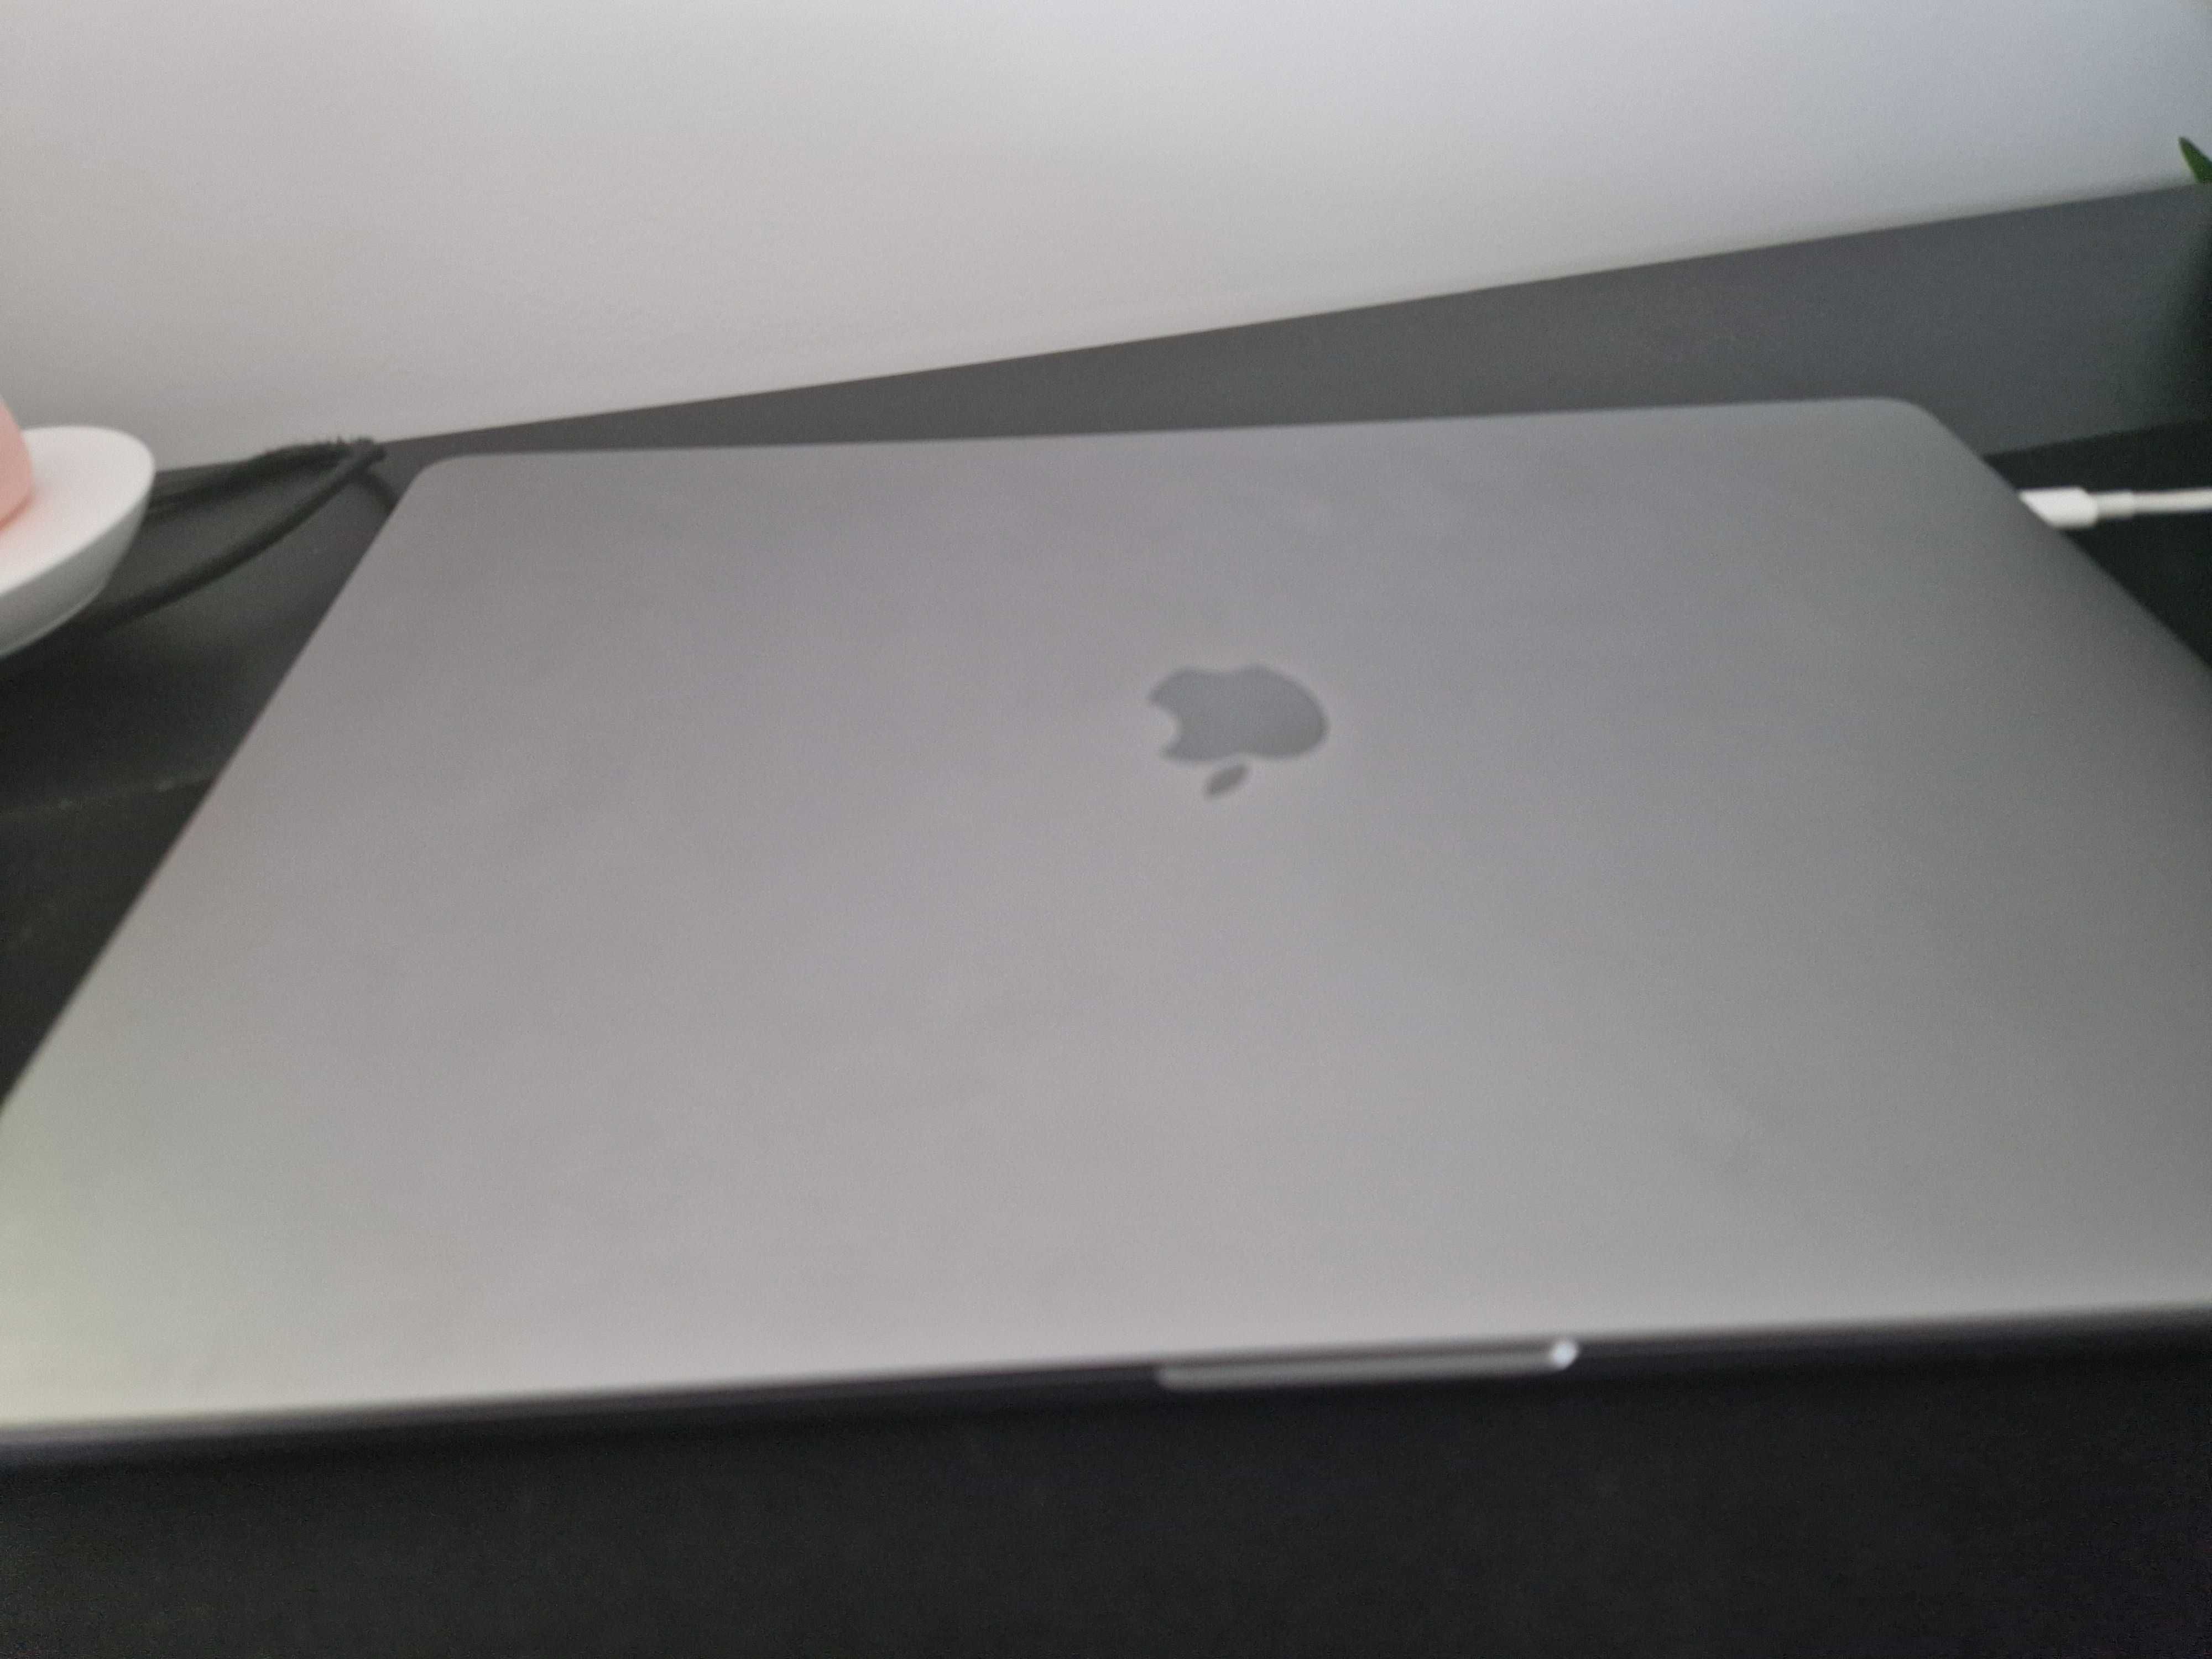 Laptop MacBook Pro 16 2019 32 GB Ram, Intel Core I9 2.4